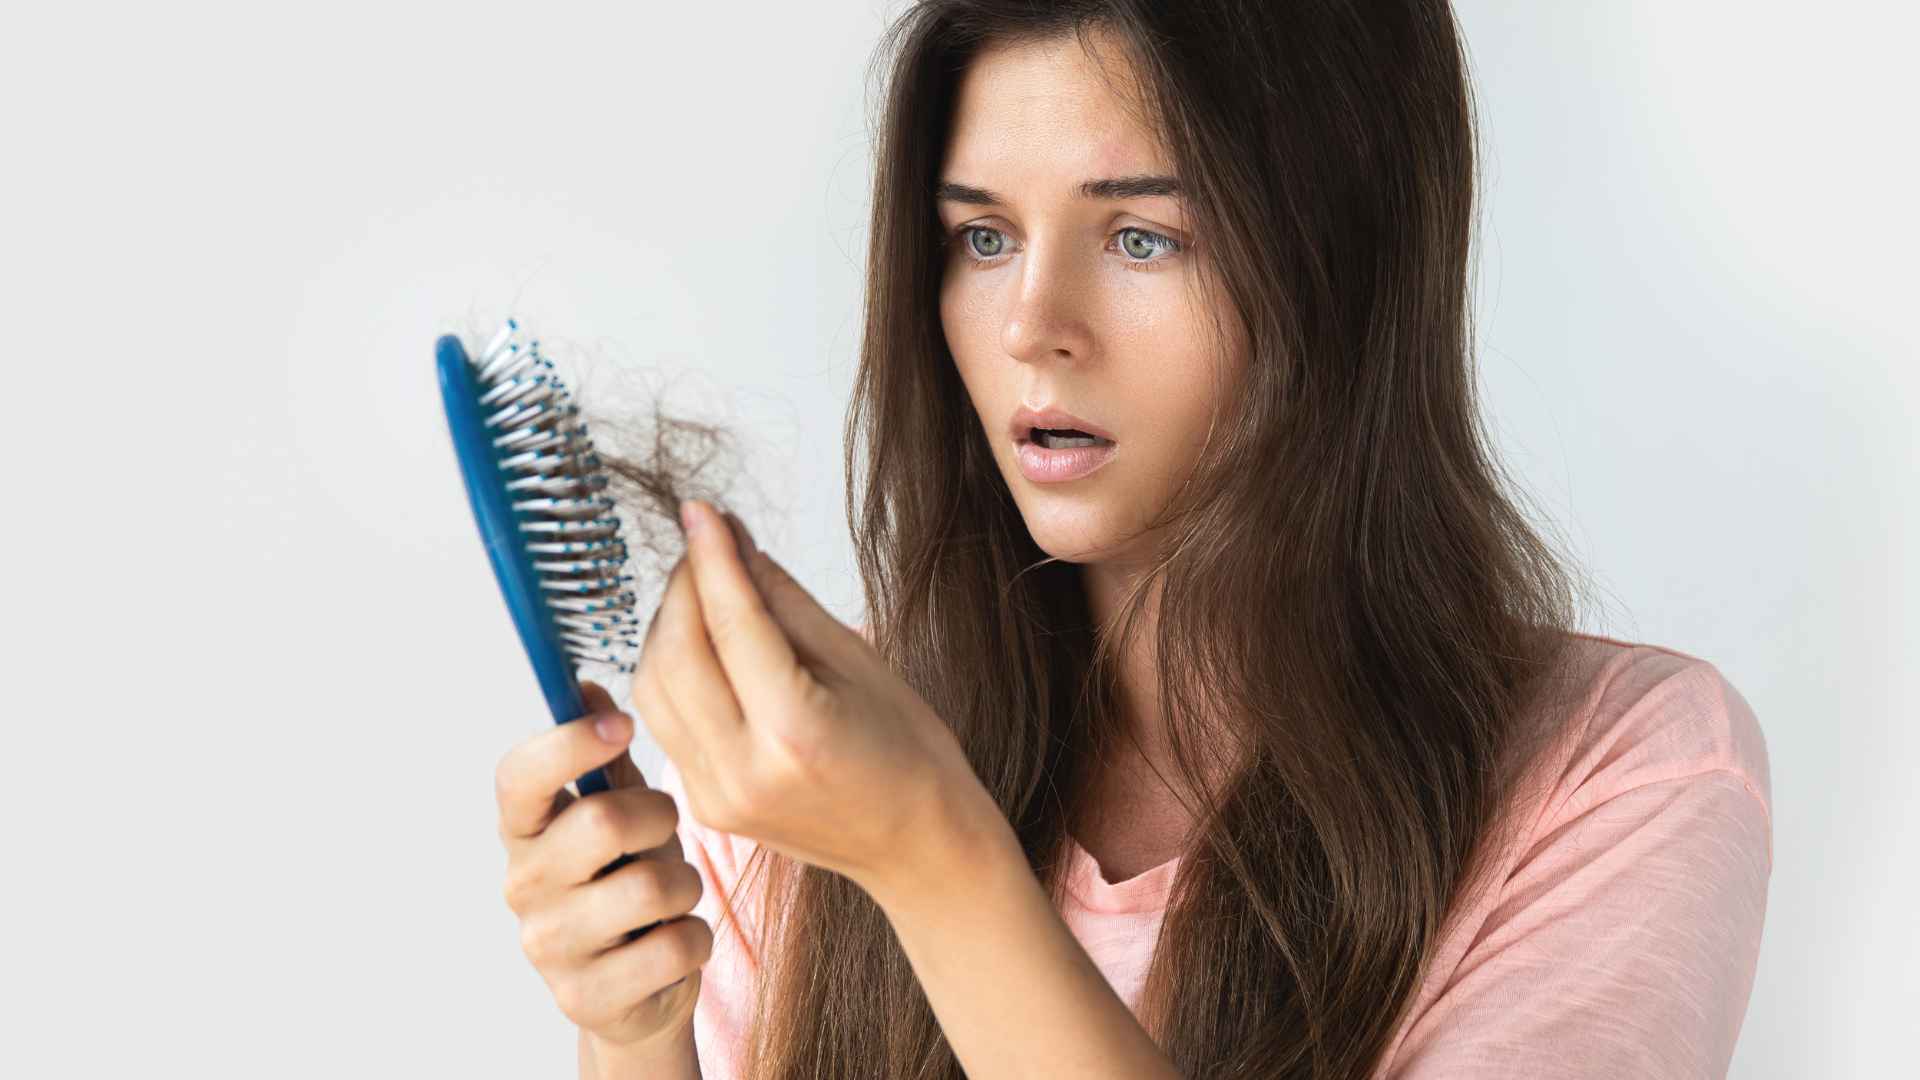 Is hair loss normal